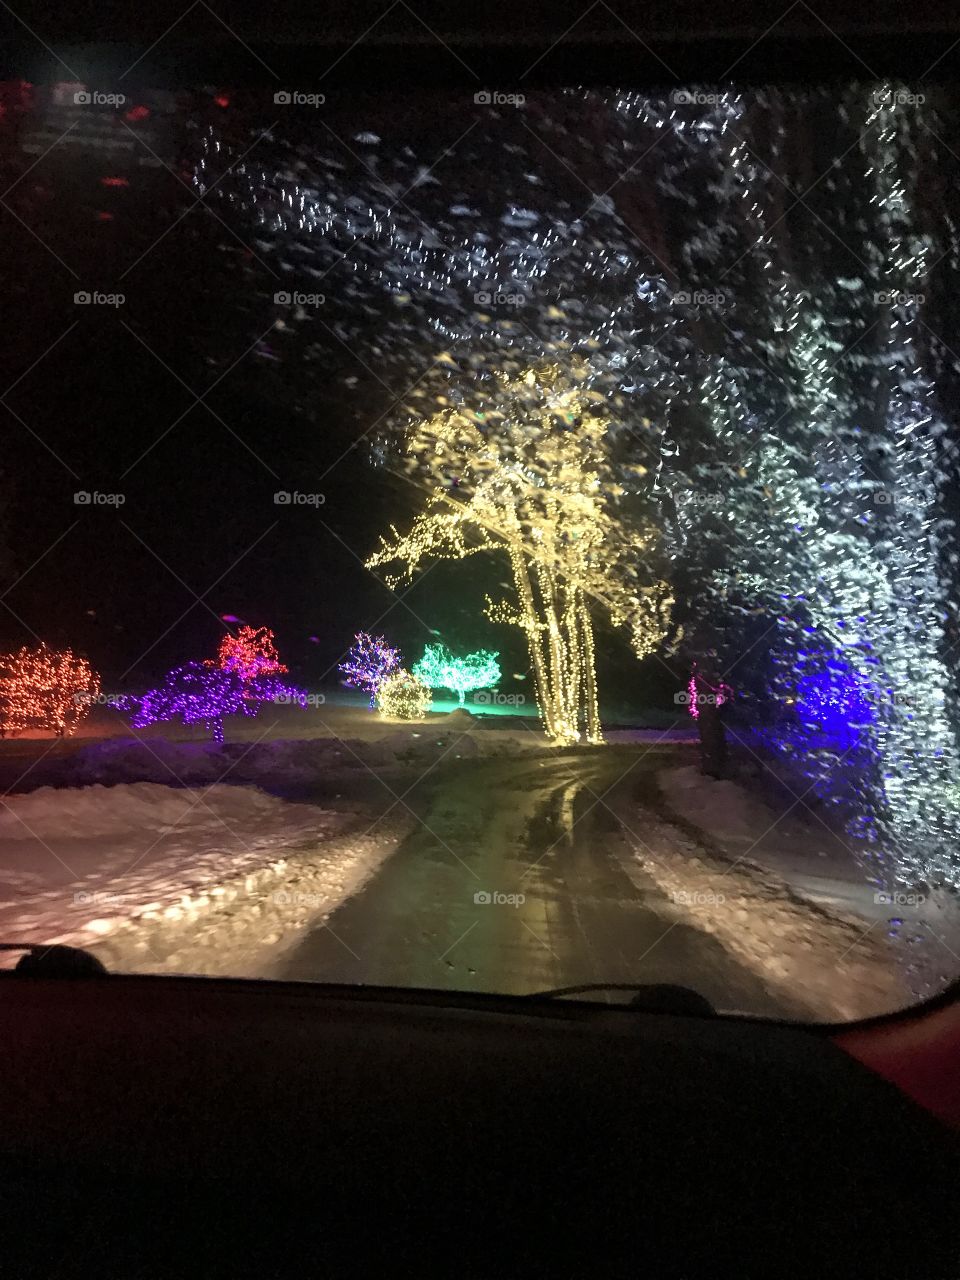 Pretty lights